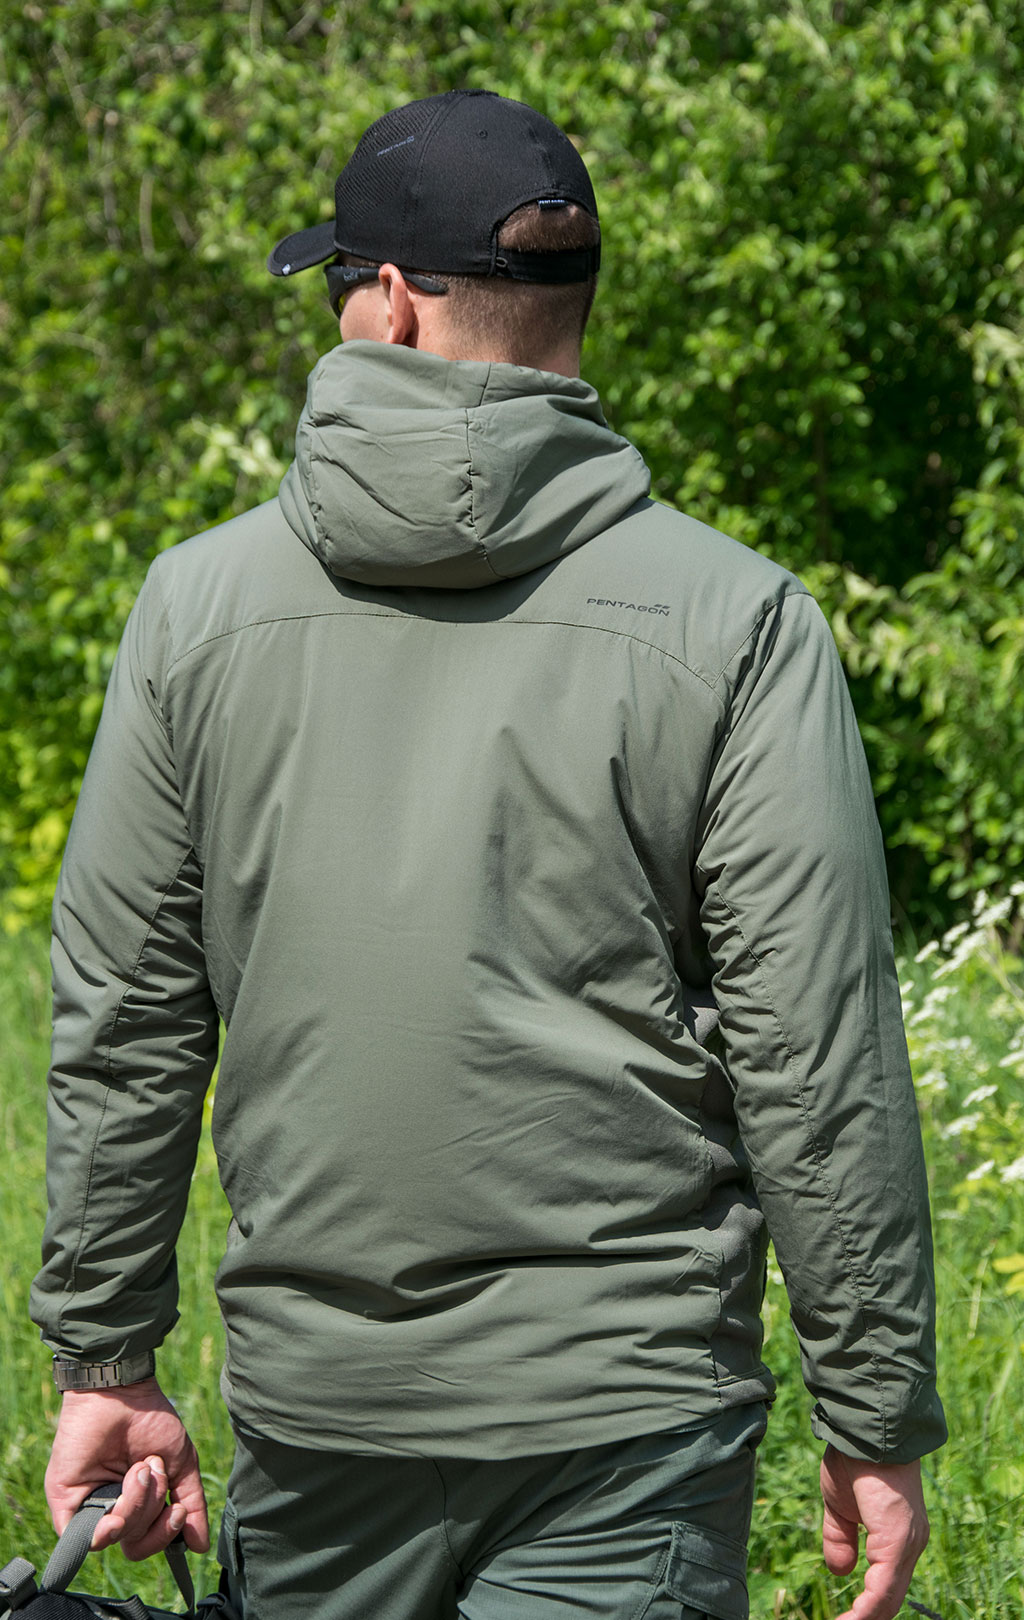 Куртка Pentagon Thinsulate PANTHIRAS утеплённая с капюшоном green camo 06CG 08032 